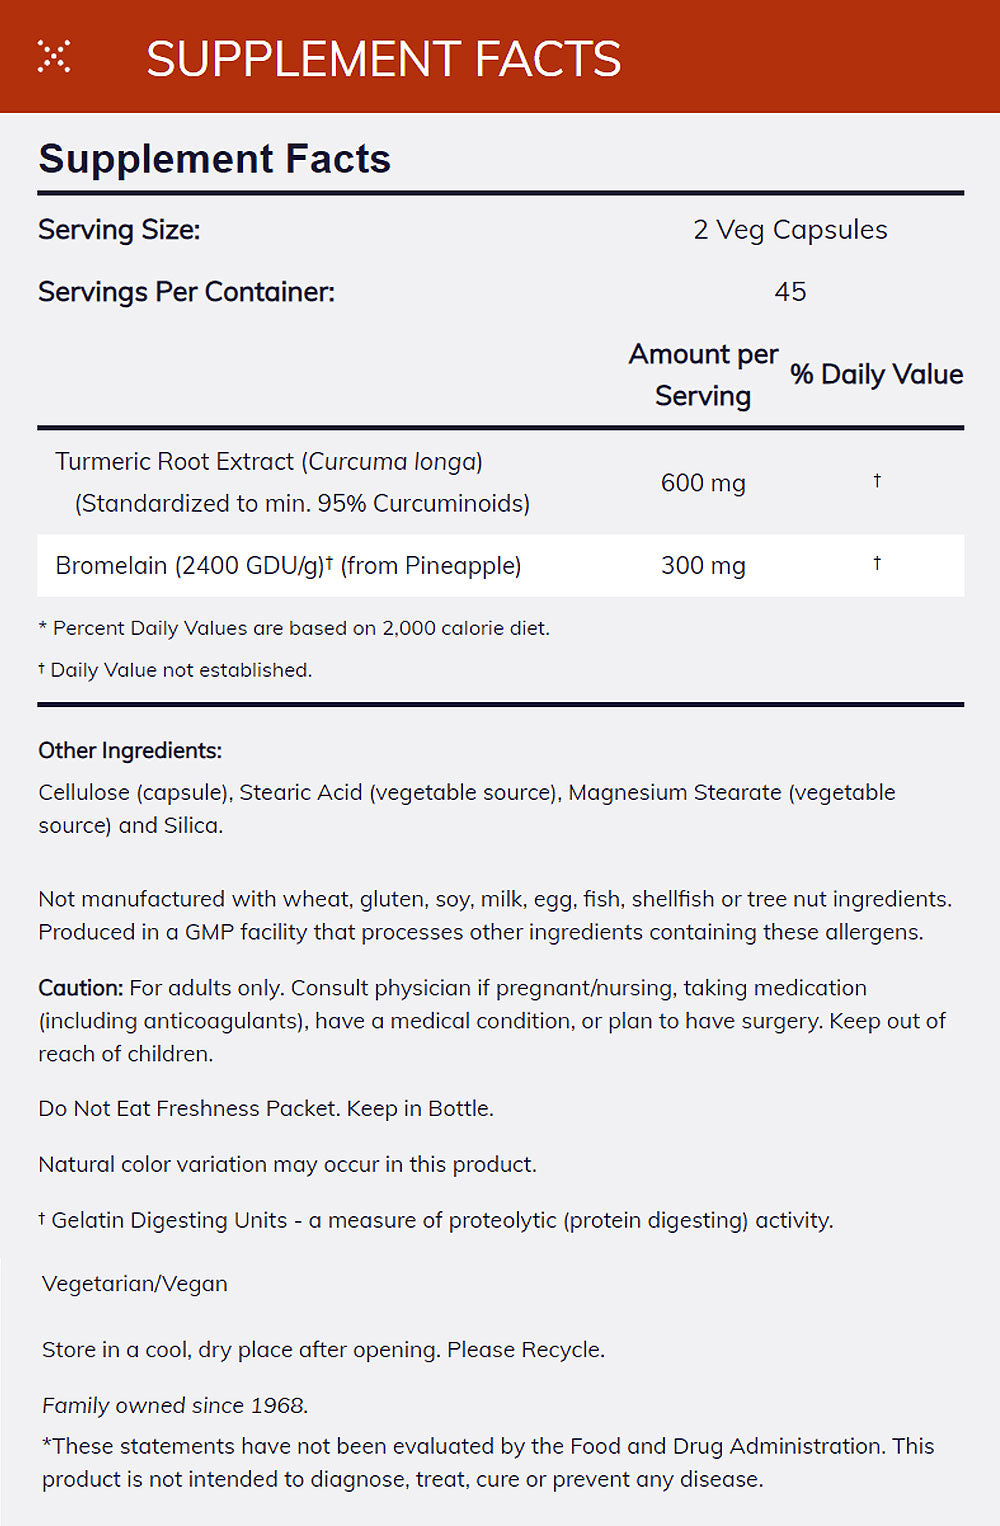 NOW Supplements, Turmeric & Bromelain (Standardized Turmeric Extract) with Bromelain 2400 GDU/g, 90 Veg Capsules